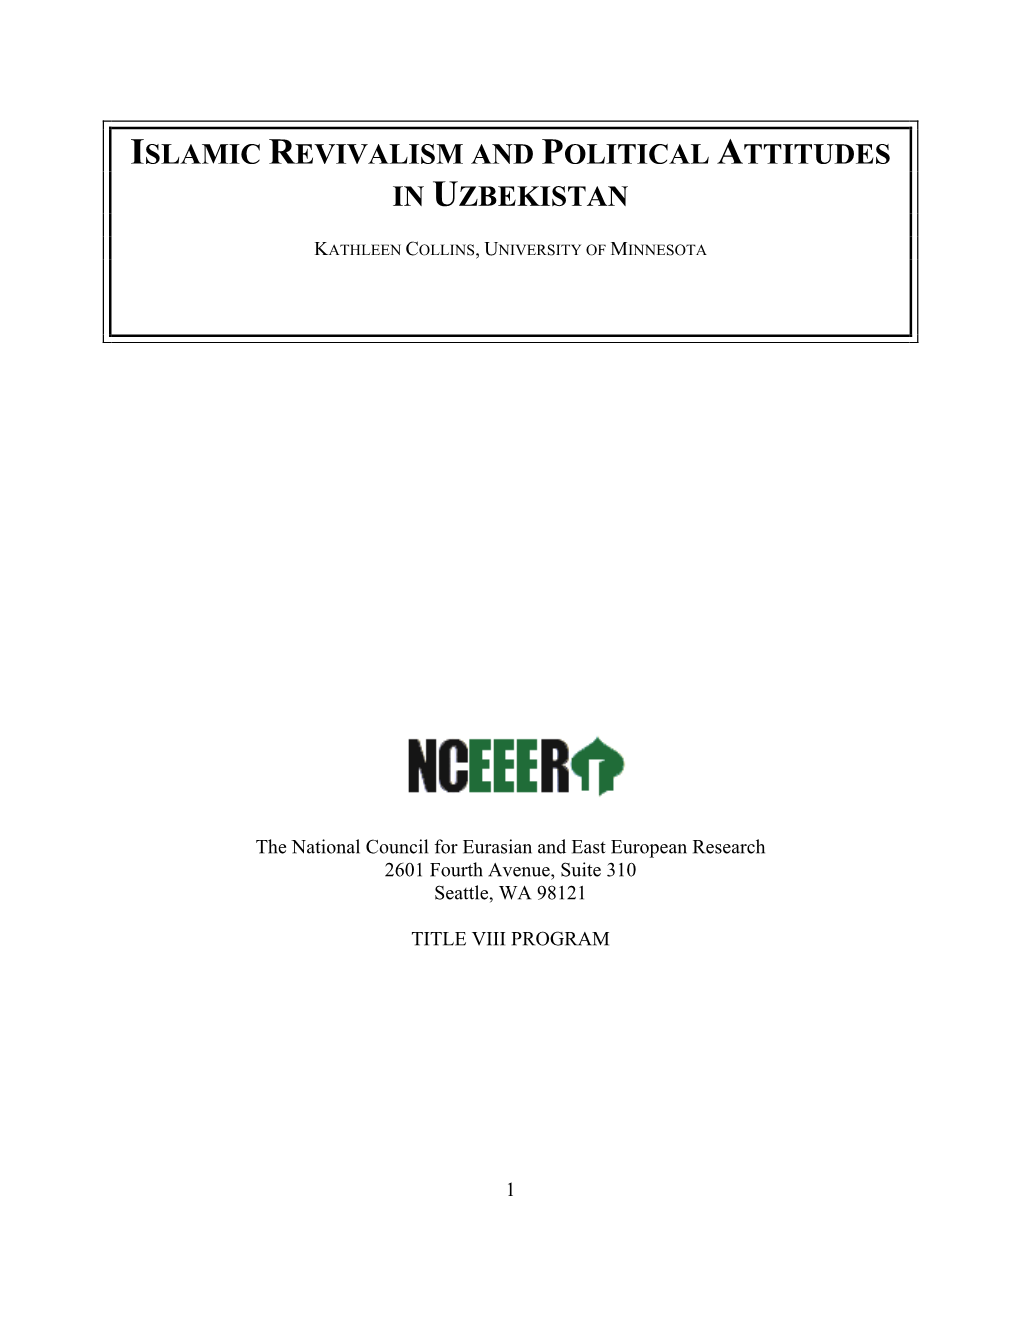 Islamic Revivalism and Political Attitudes in Uzbekistan